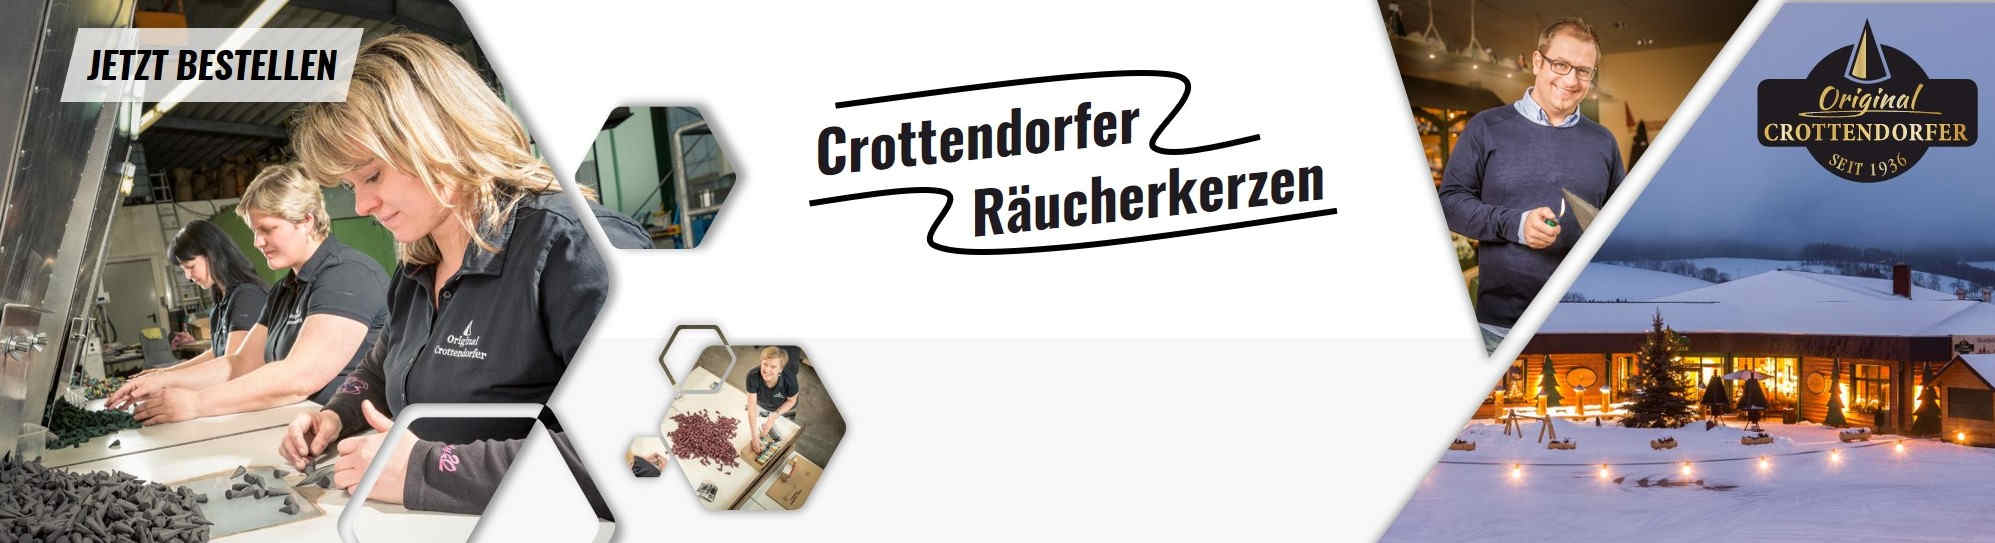 Crottendorfer Räucherkerzen im Dresden Onlineshop entdecken